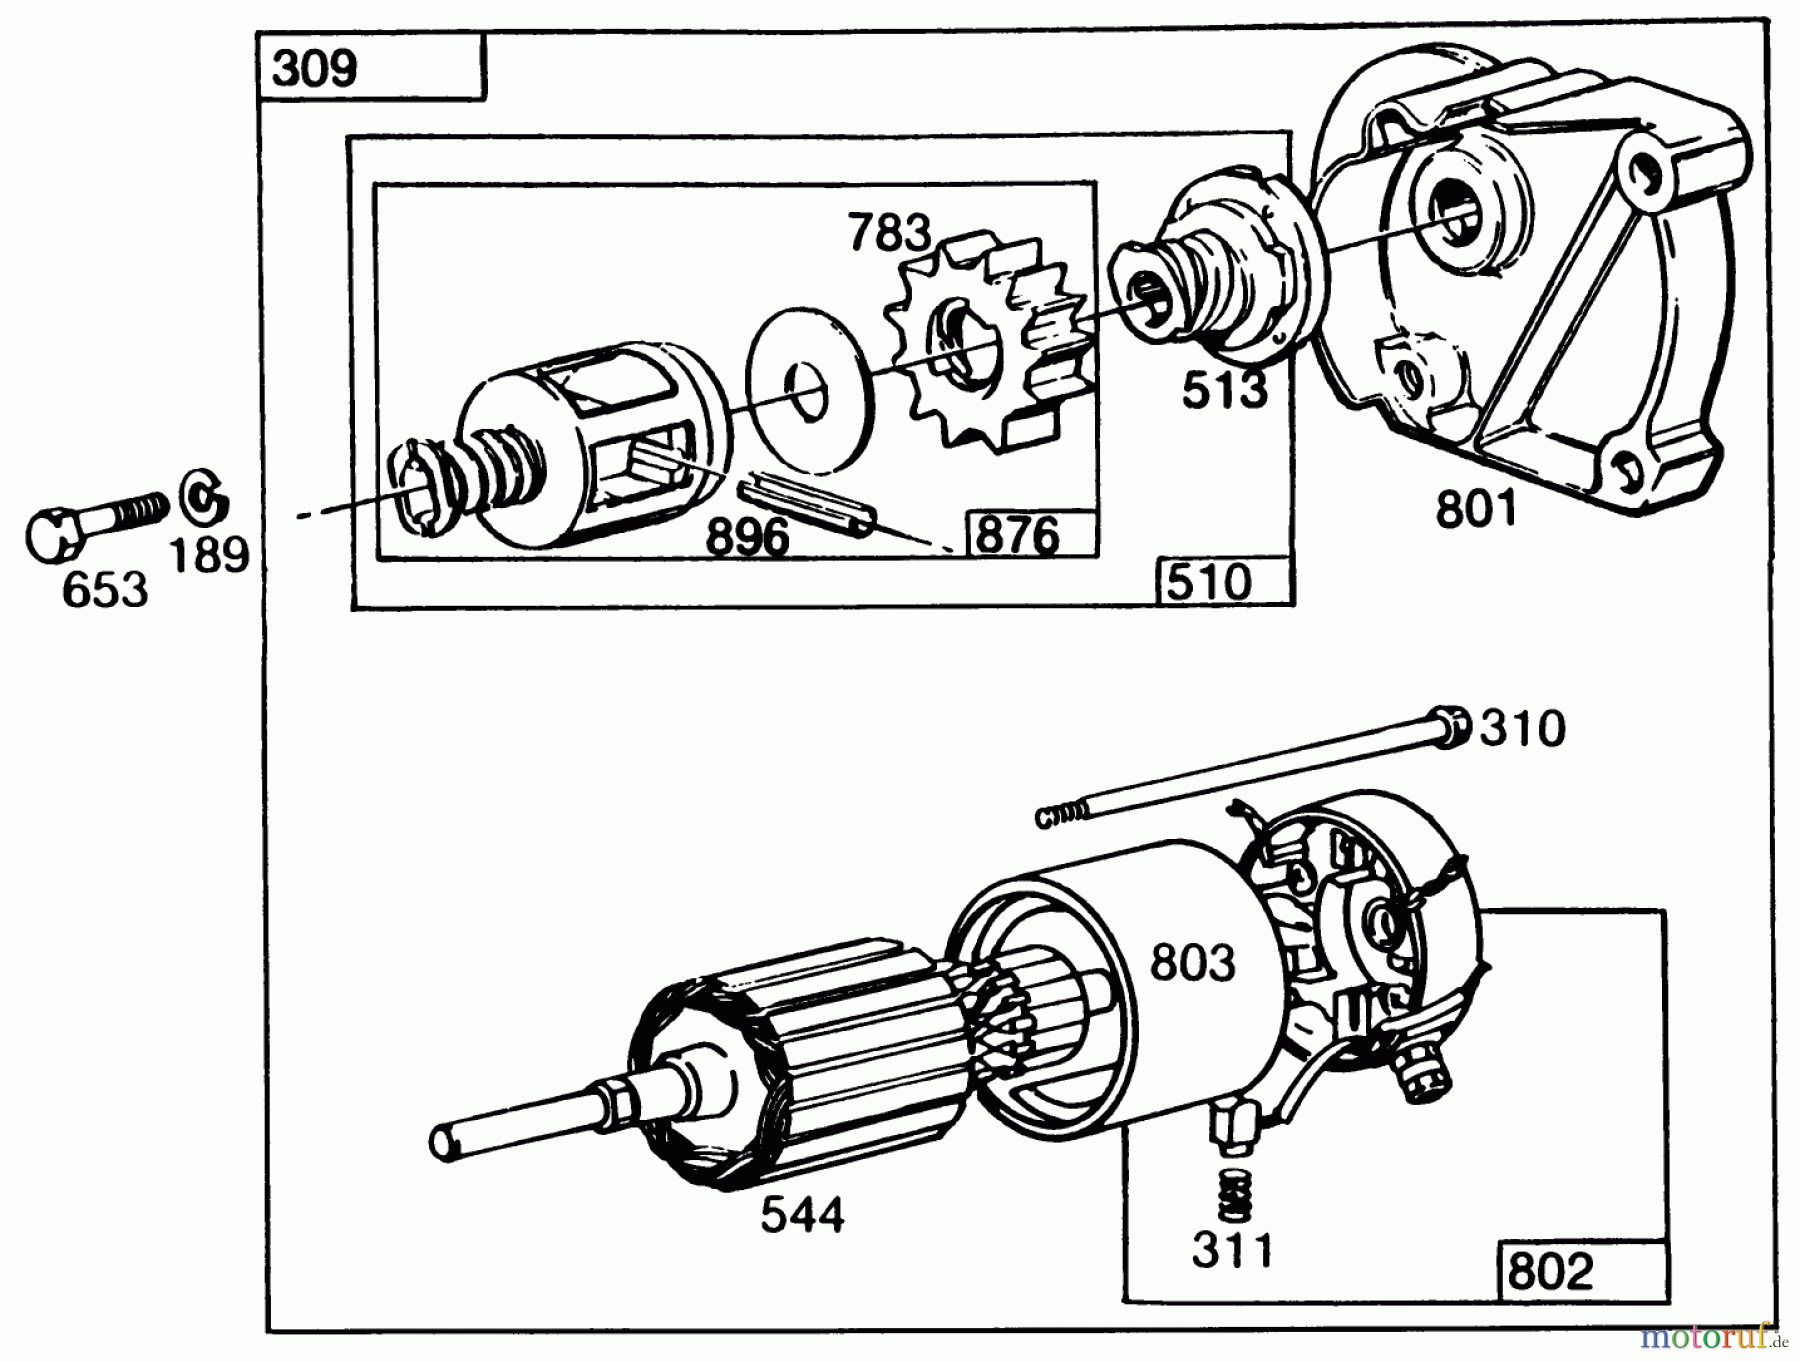  Toro Neu Mowers, Drive Unit Only 30116 - Toro Mid-Size Proline Gear Traction Unit, 16 hp, 1986 (6000001-6999999) ENGINE BRIGGS & STRATTON MODEL NO. 402707-0158-01 #4